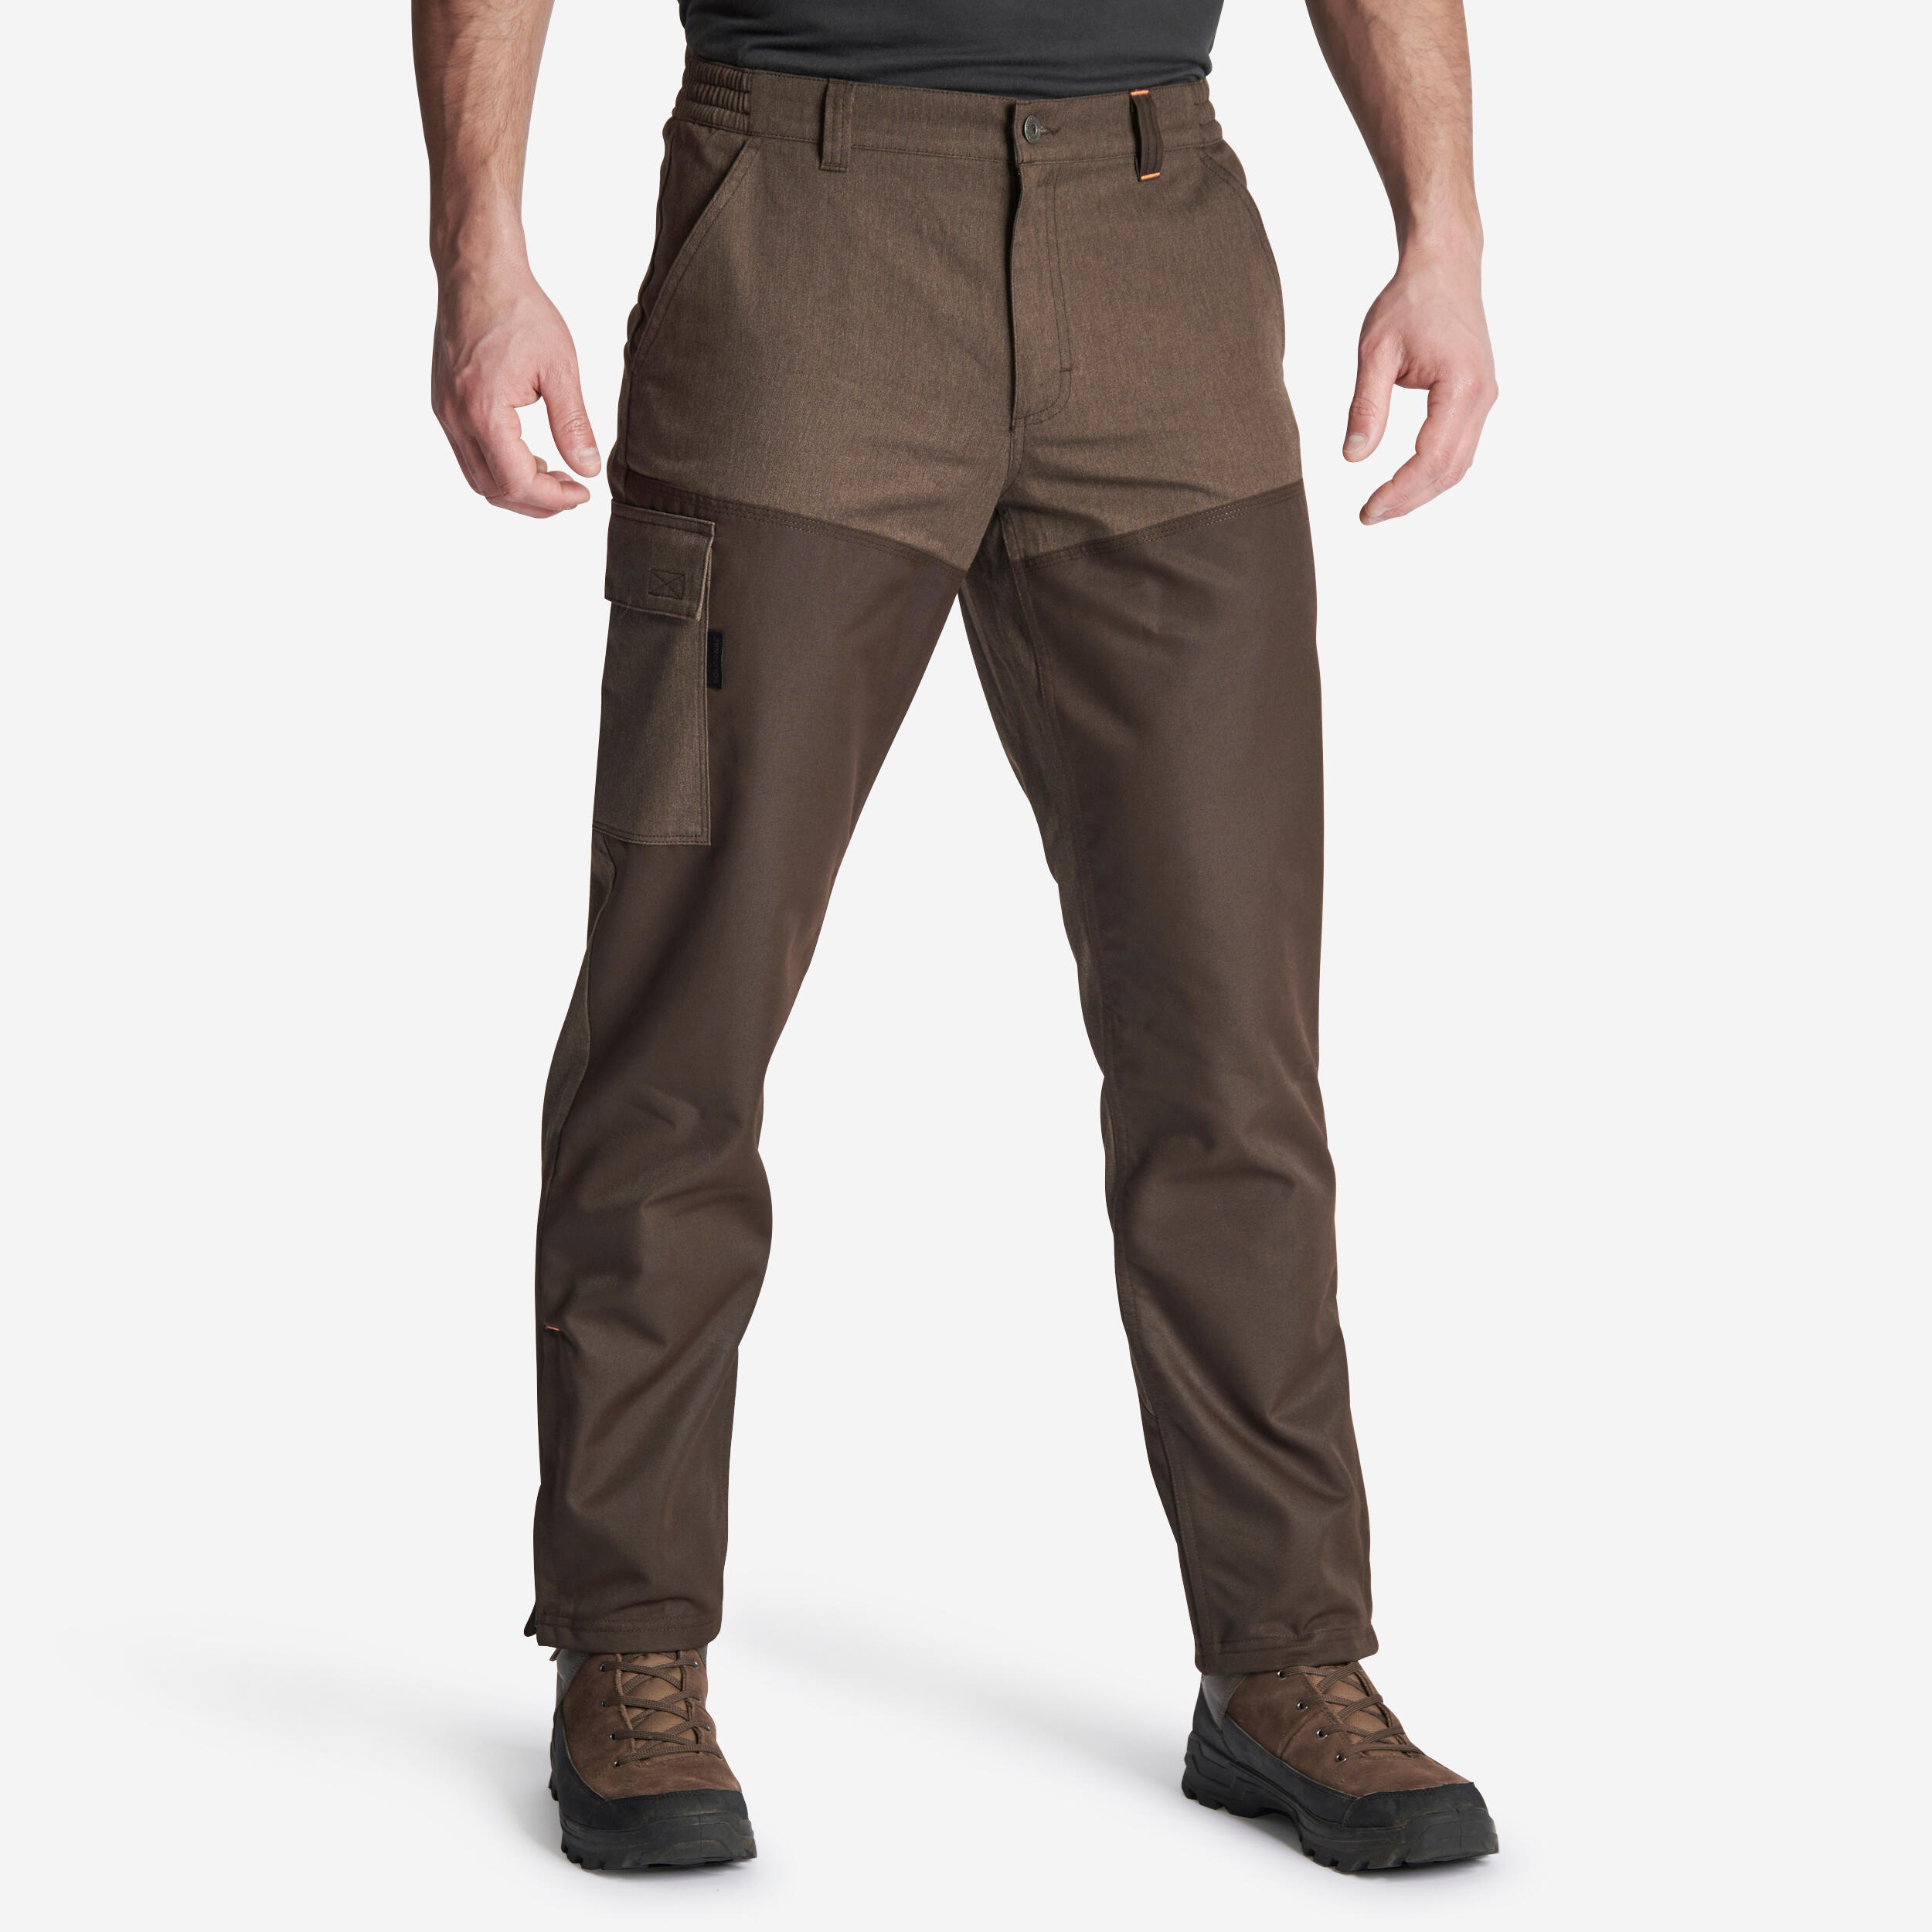 Warm Waterproof Hunting Trousers Pants Bottoms Treemetic 100 - Unisex -  Solognac | eBay